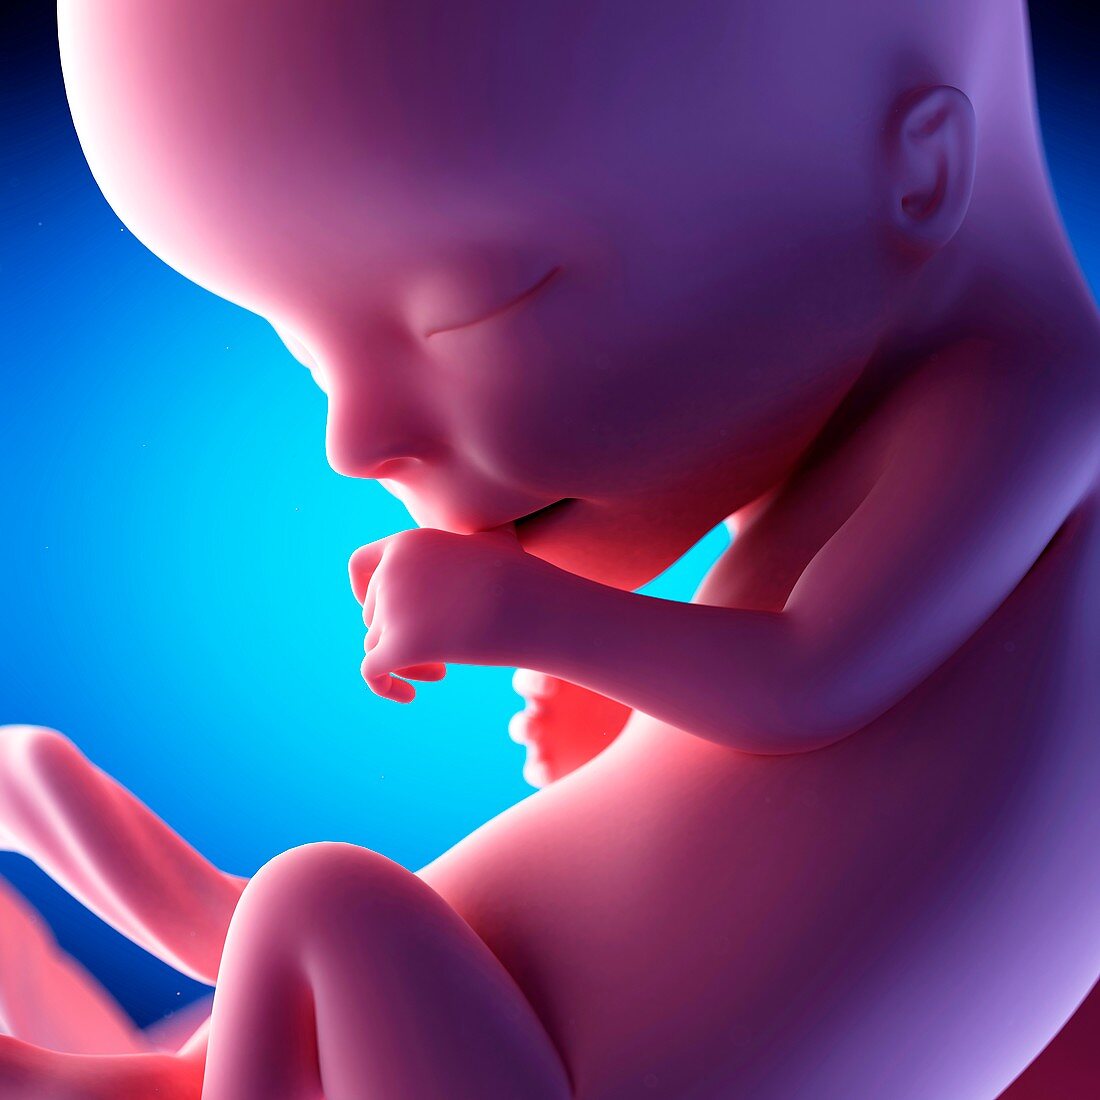 Human fetus at week 13 of gestation, illustration